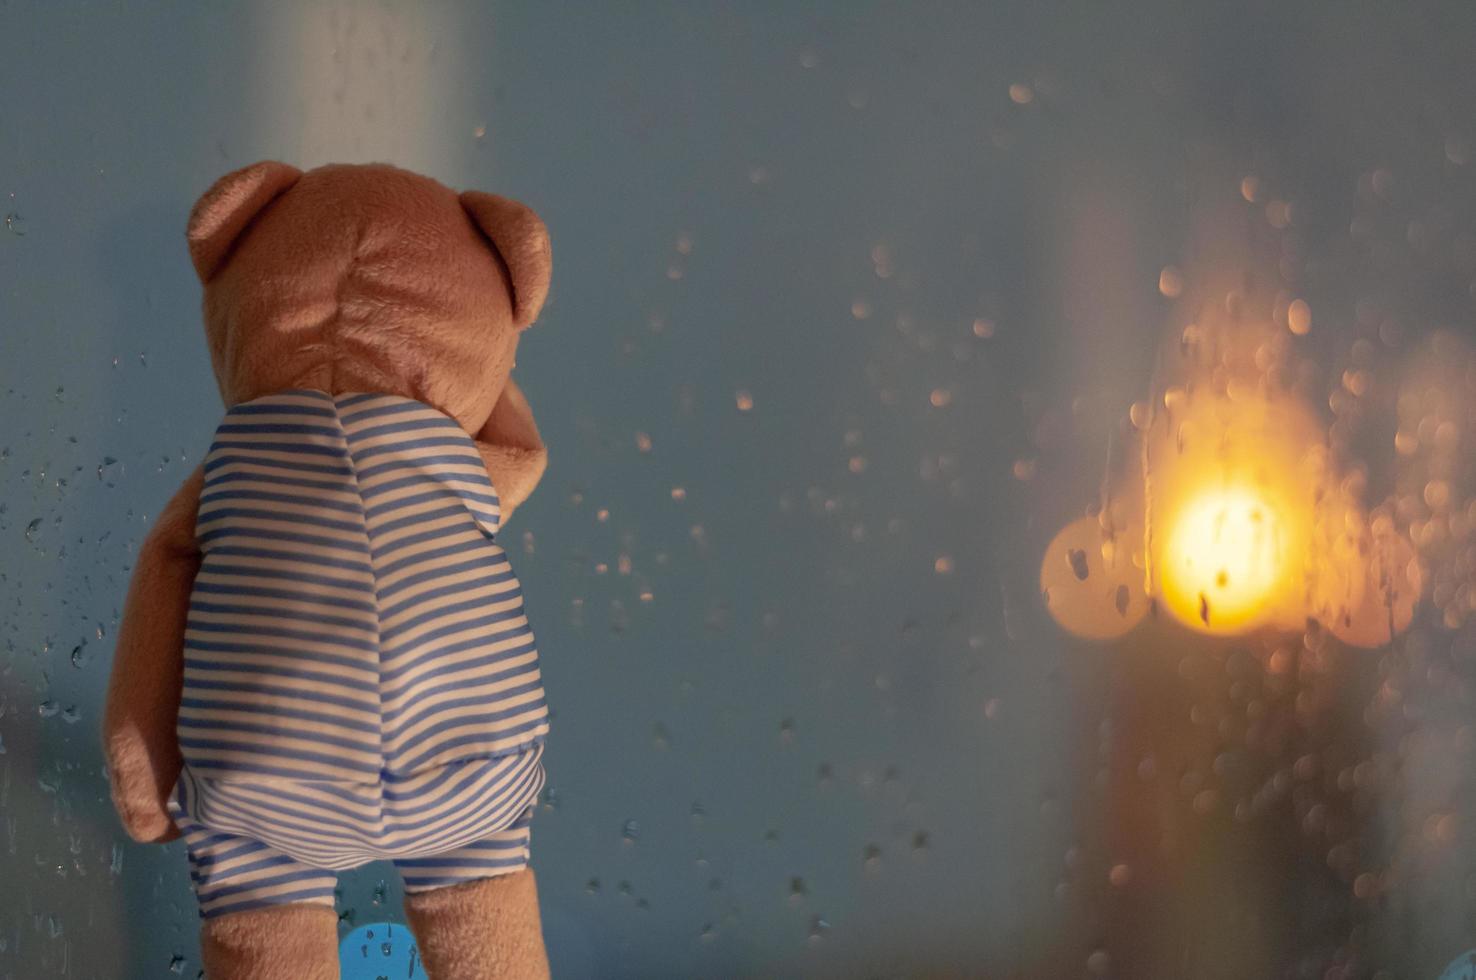 Sadly Teddy Bear crying at window in rainy day. photo